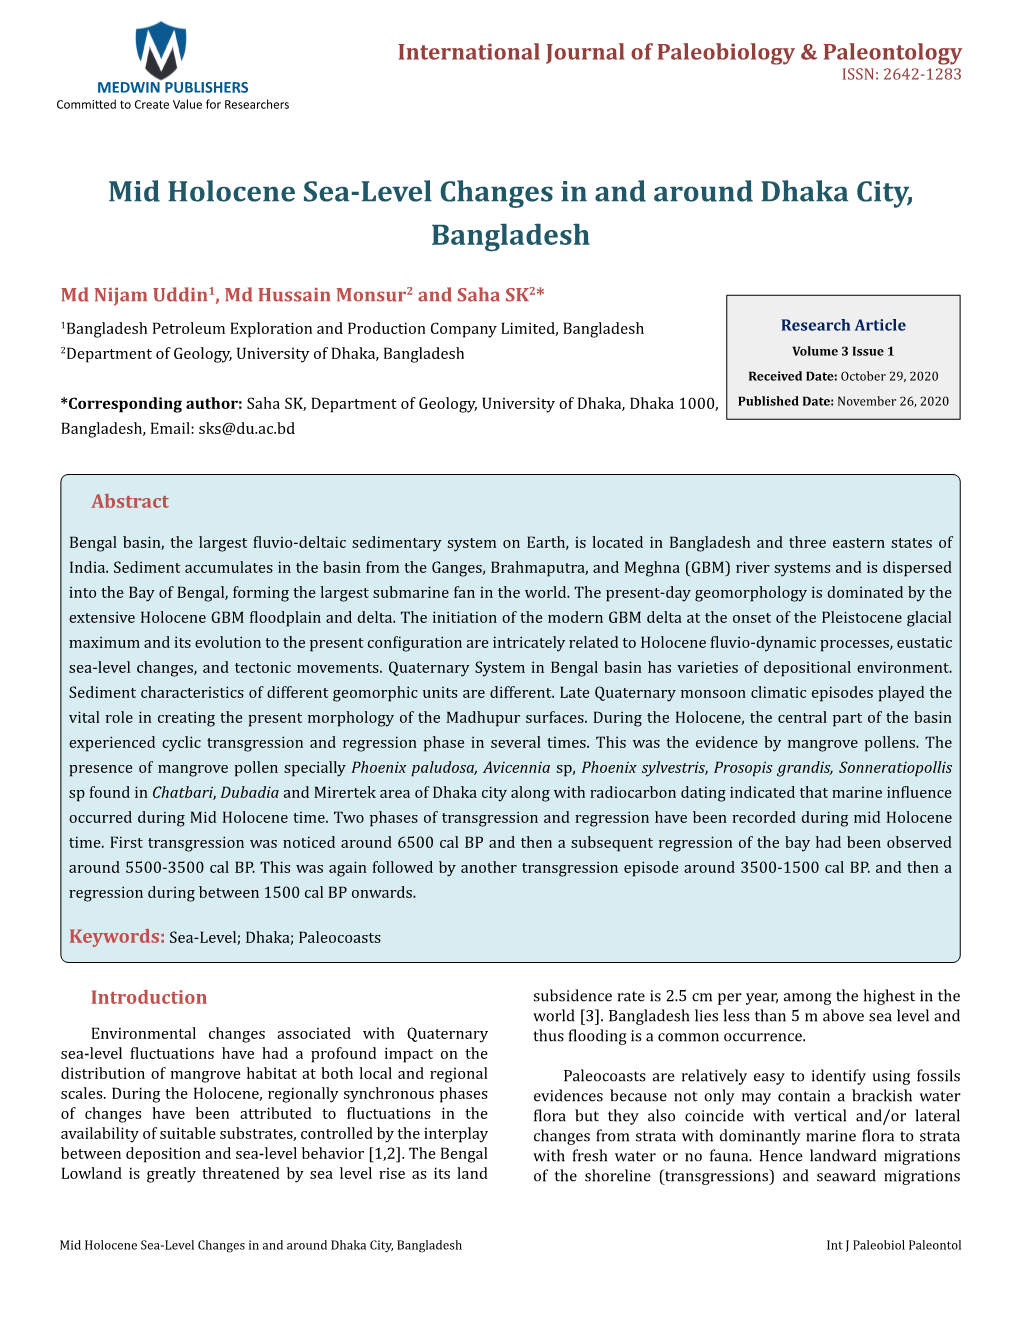 Mid Holocene Sea-Level Changes in and Around Dhaka City, Bangladesh